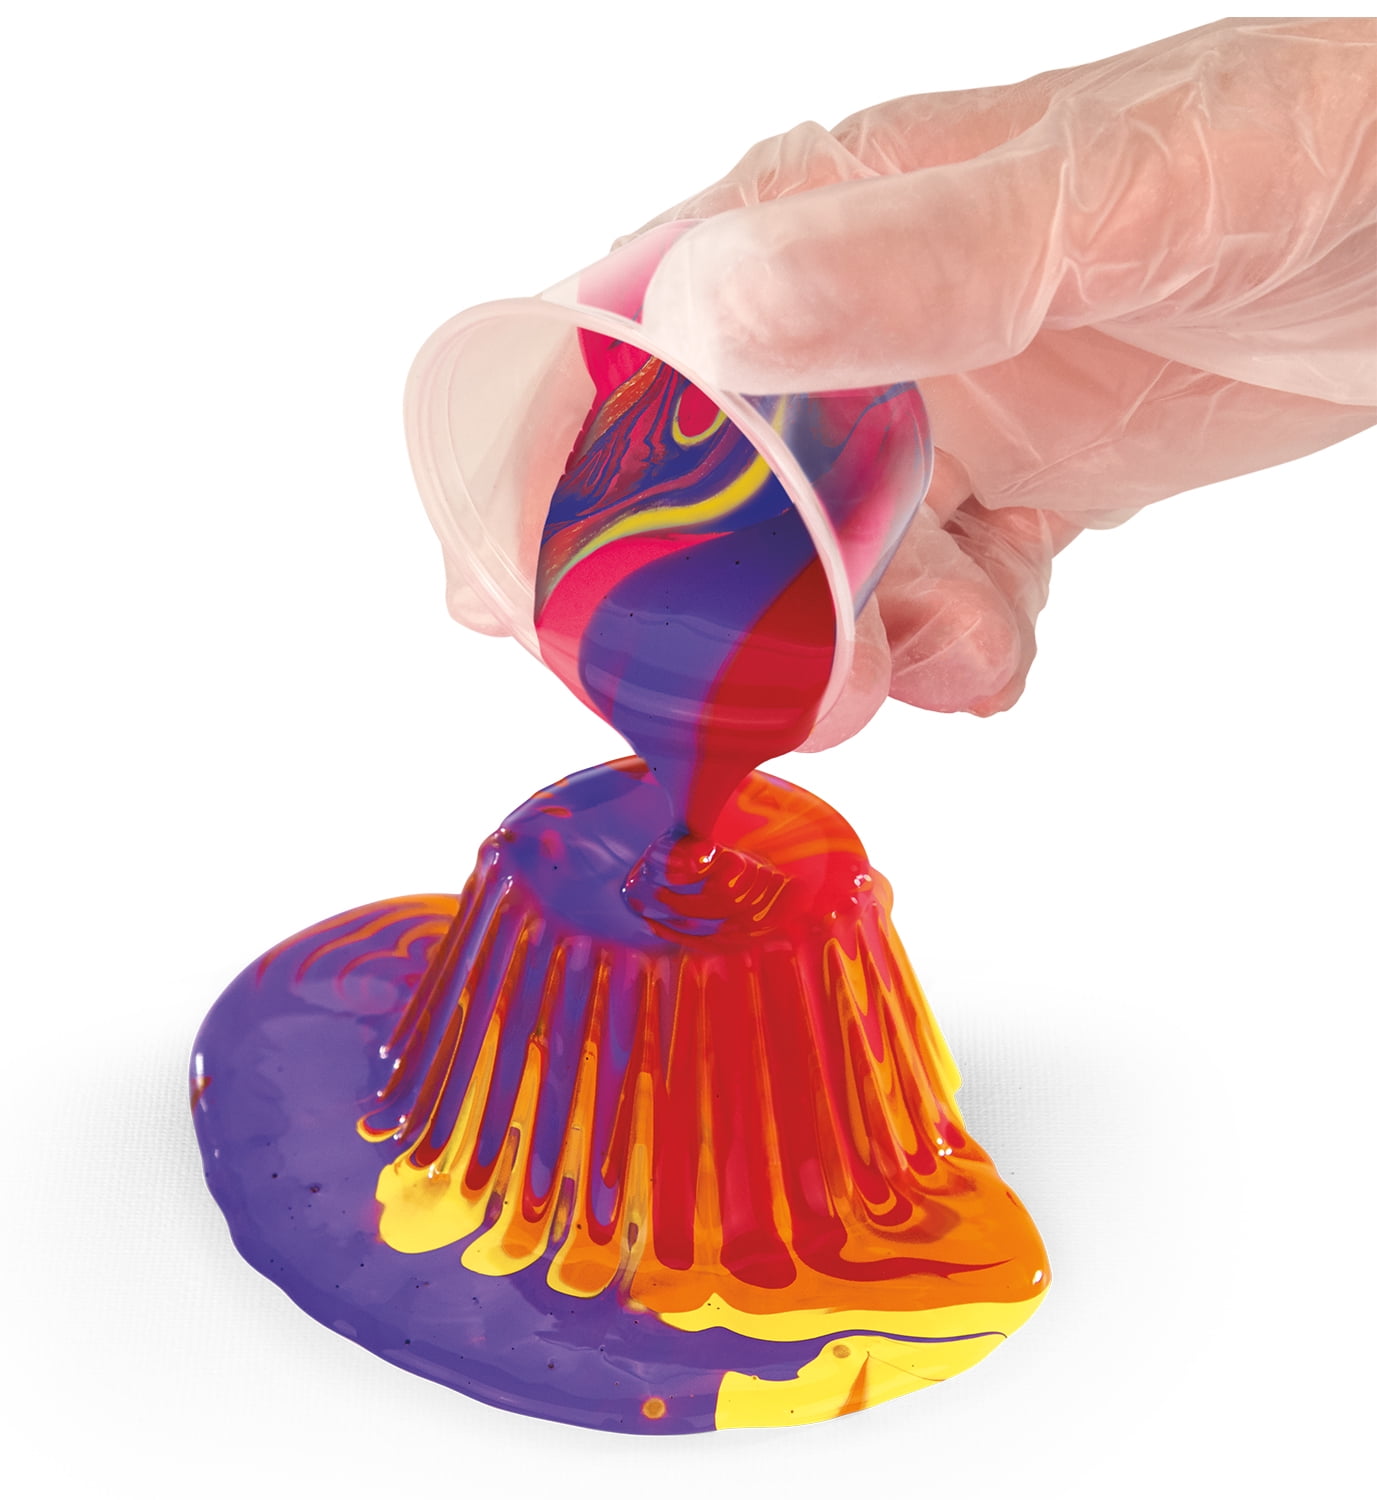 Cra-Z-Art Palmer Acrylic Pouring Paint Kit - Ocean Sunset - Crafts